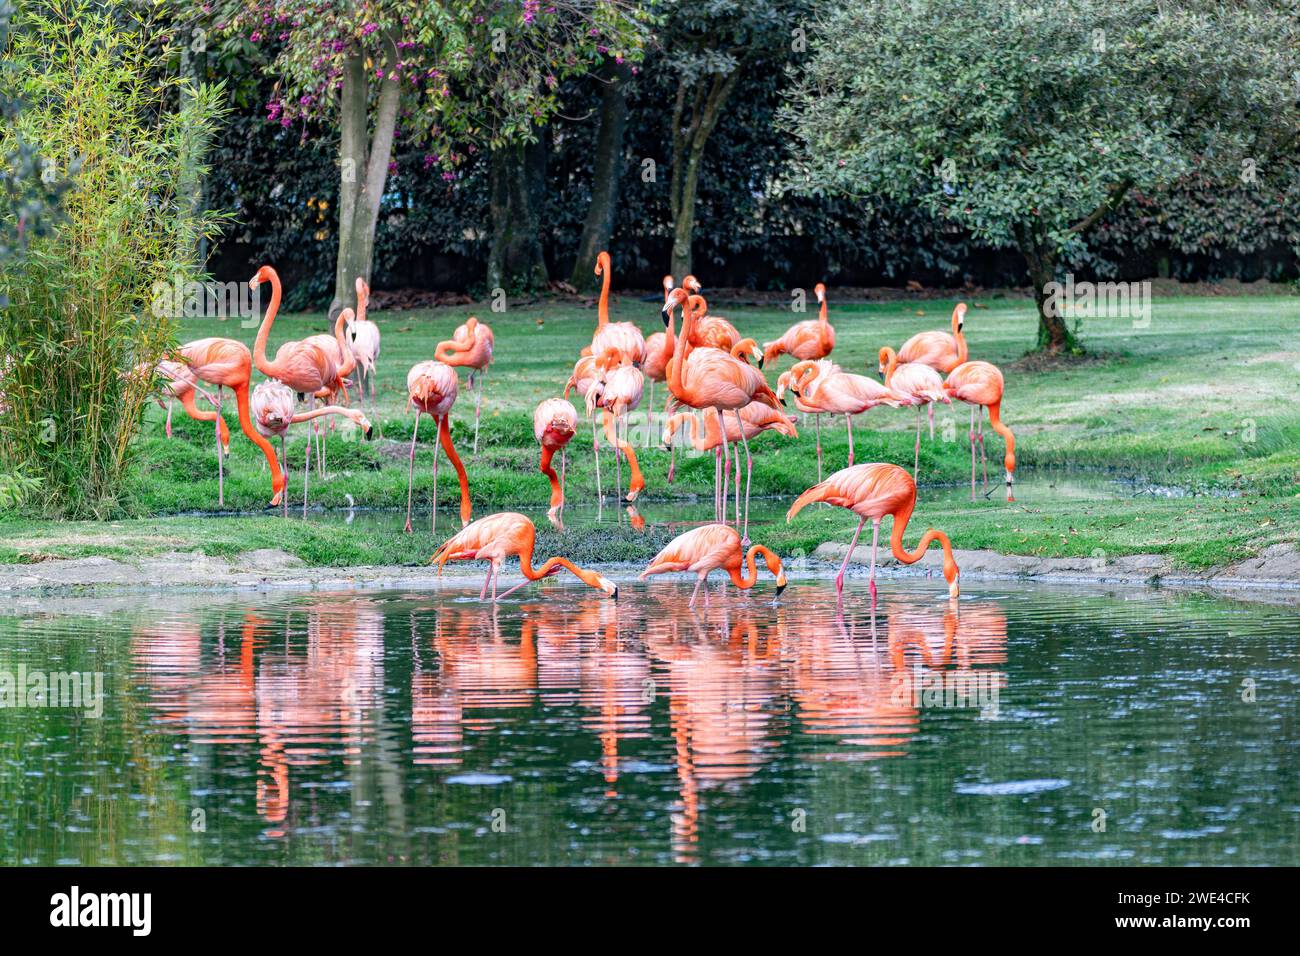 Amerikanischer Flamingo (Phoenicopterus ruber), bekannt als karibischer Flamingo. Große Flamingoarten. Reserva Natural Bioparque Wakata. Briceno munici Stockfoto